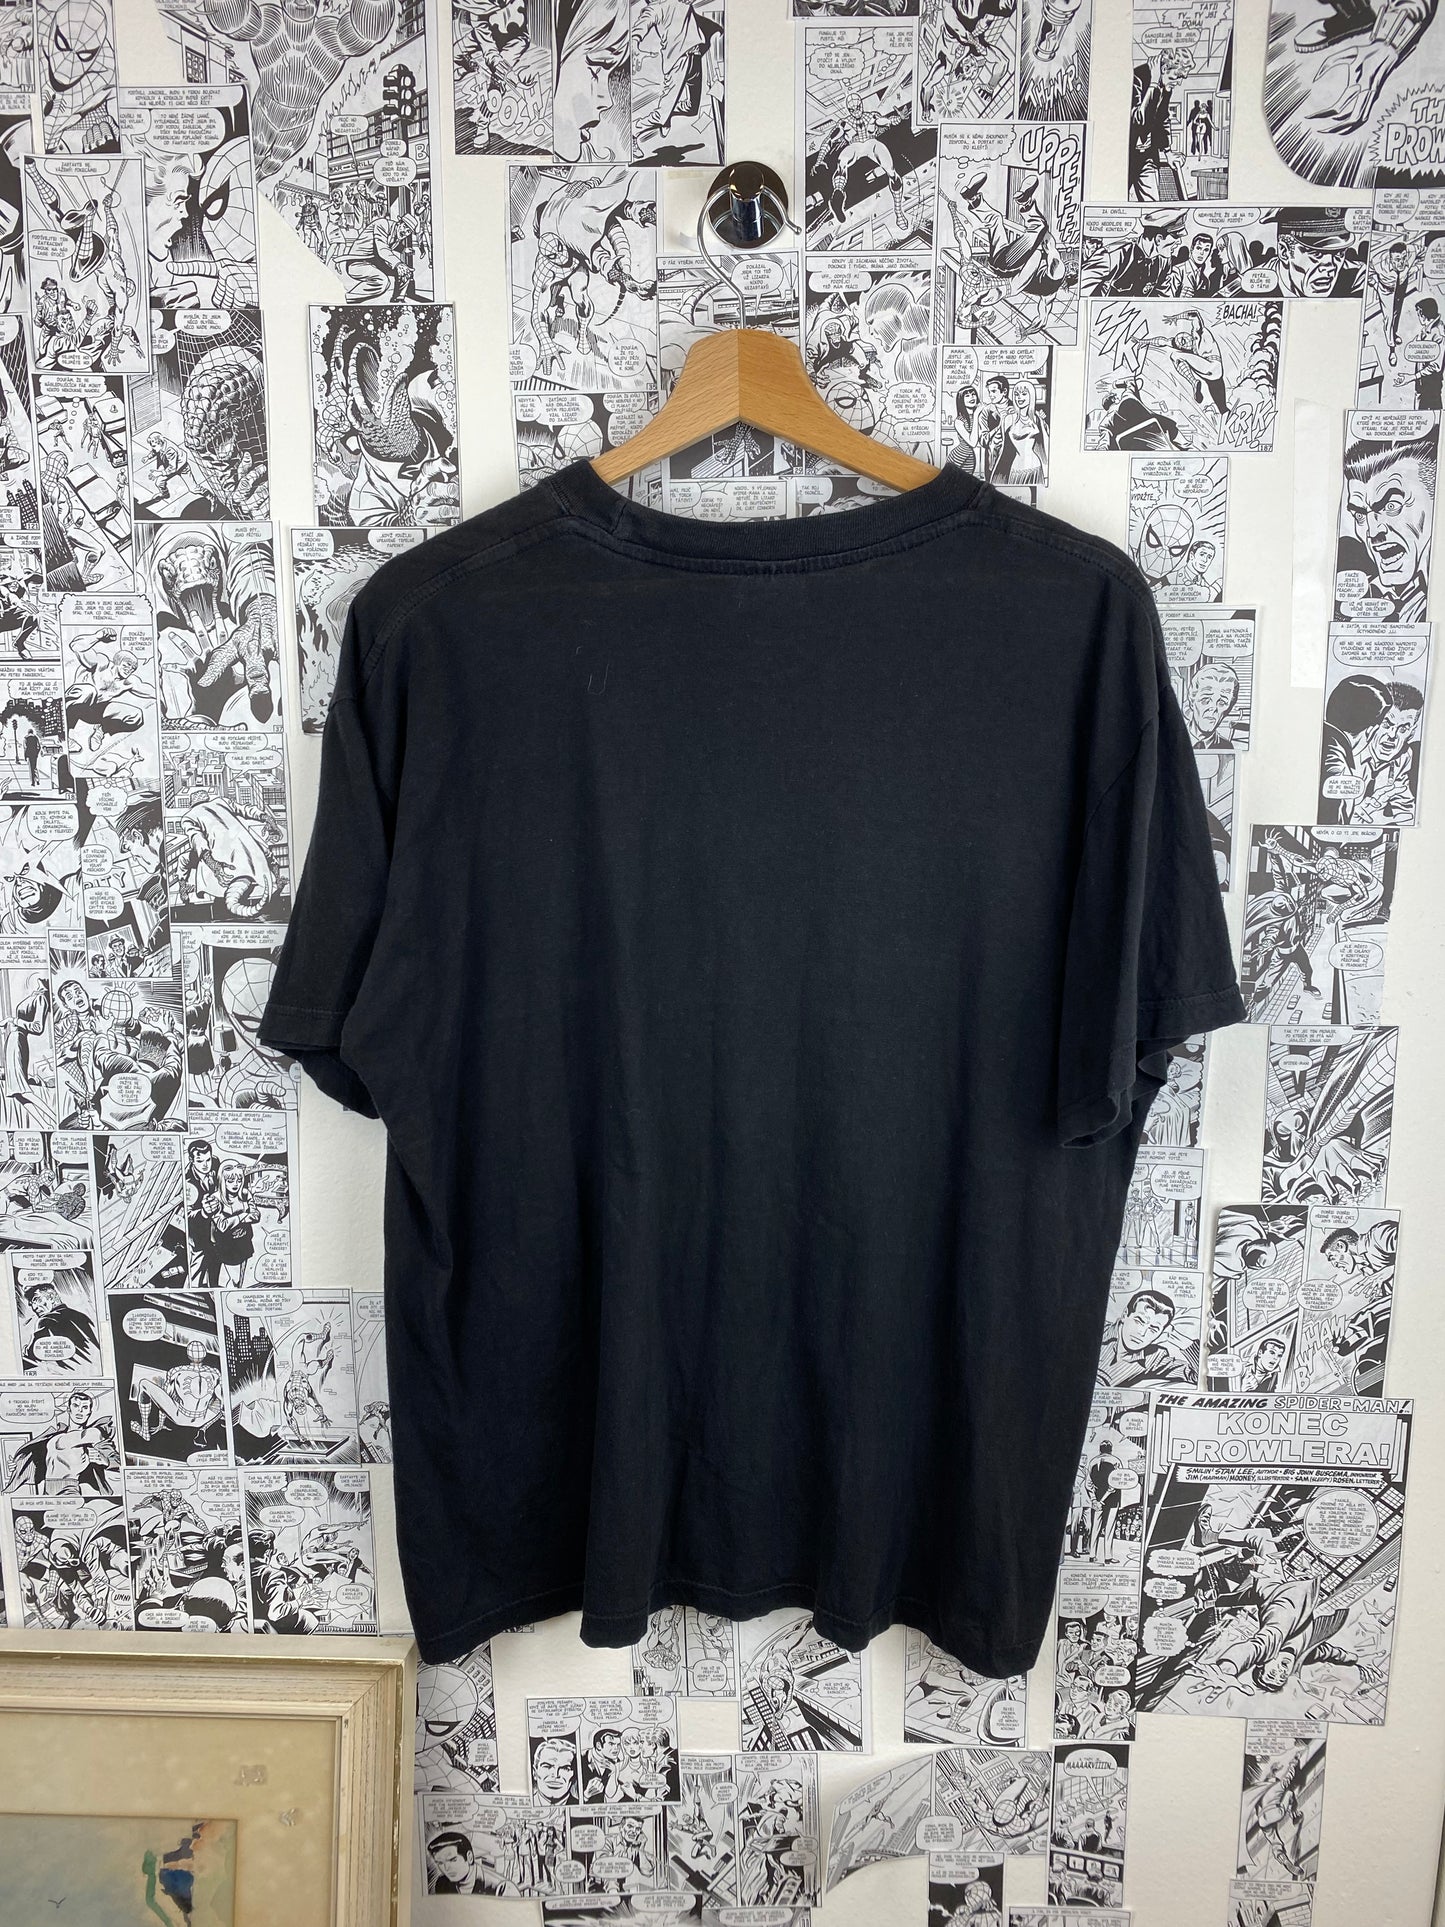 Vintage AC DC “Hell’s Bells” T-shirt - size L